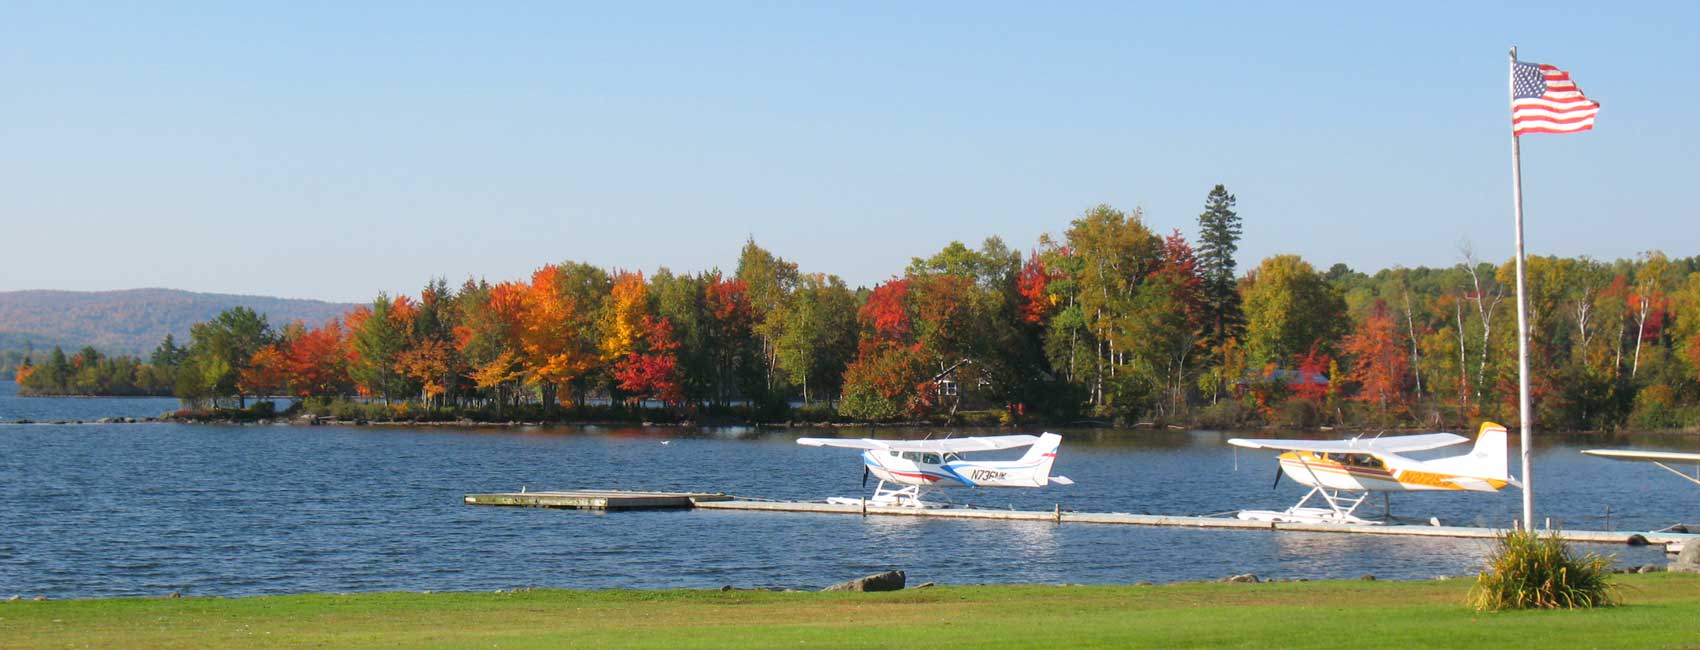 Rangeley Autumn Foliage with Float Plane